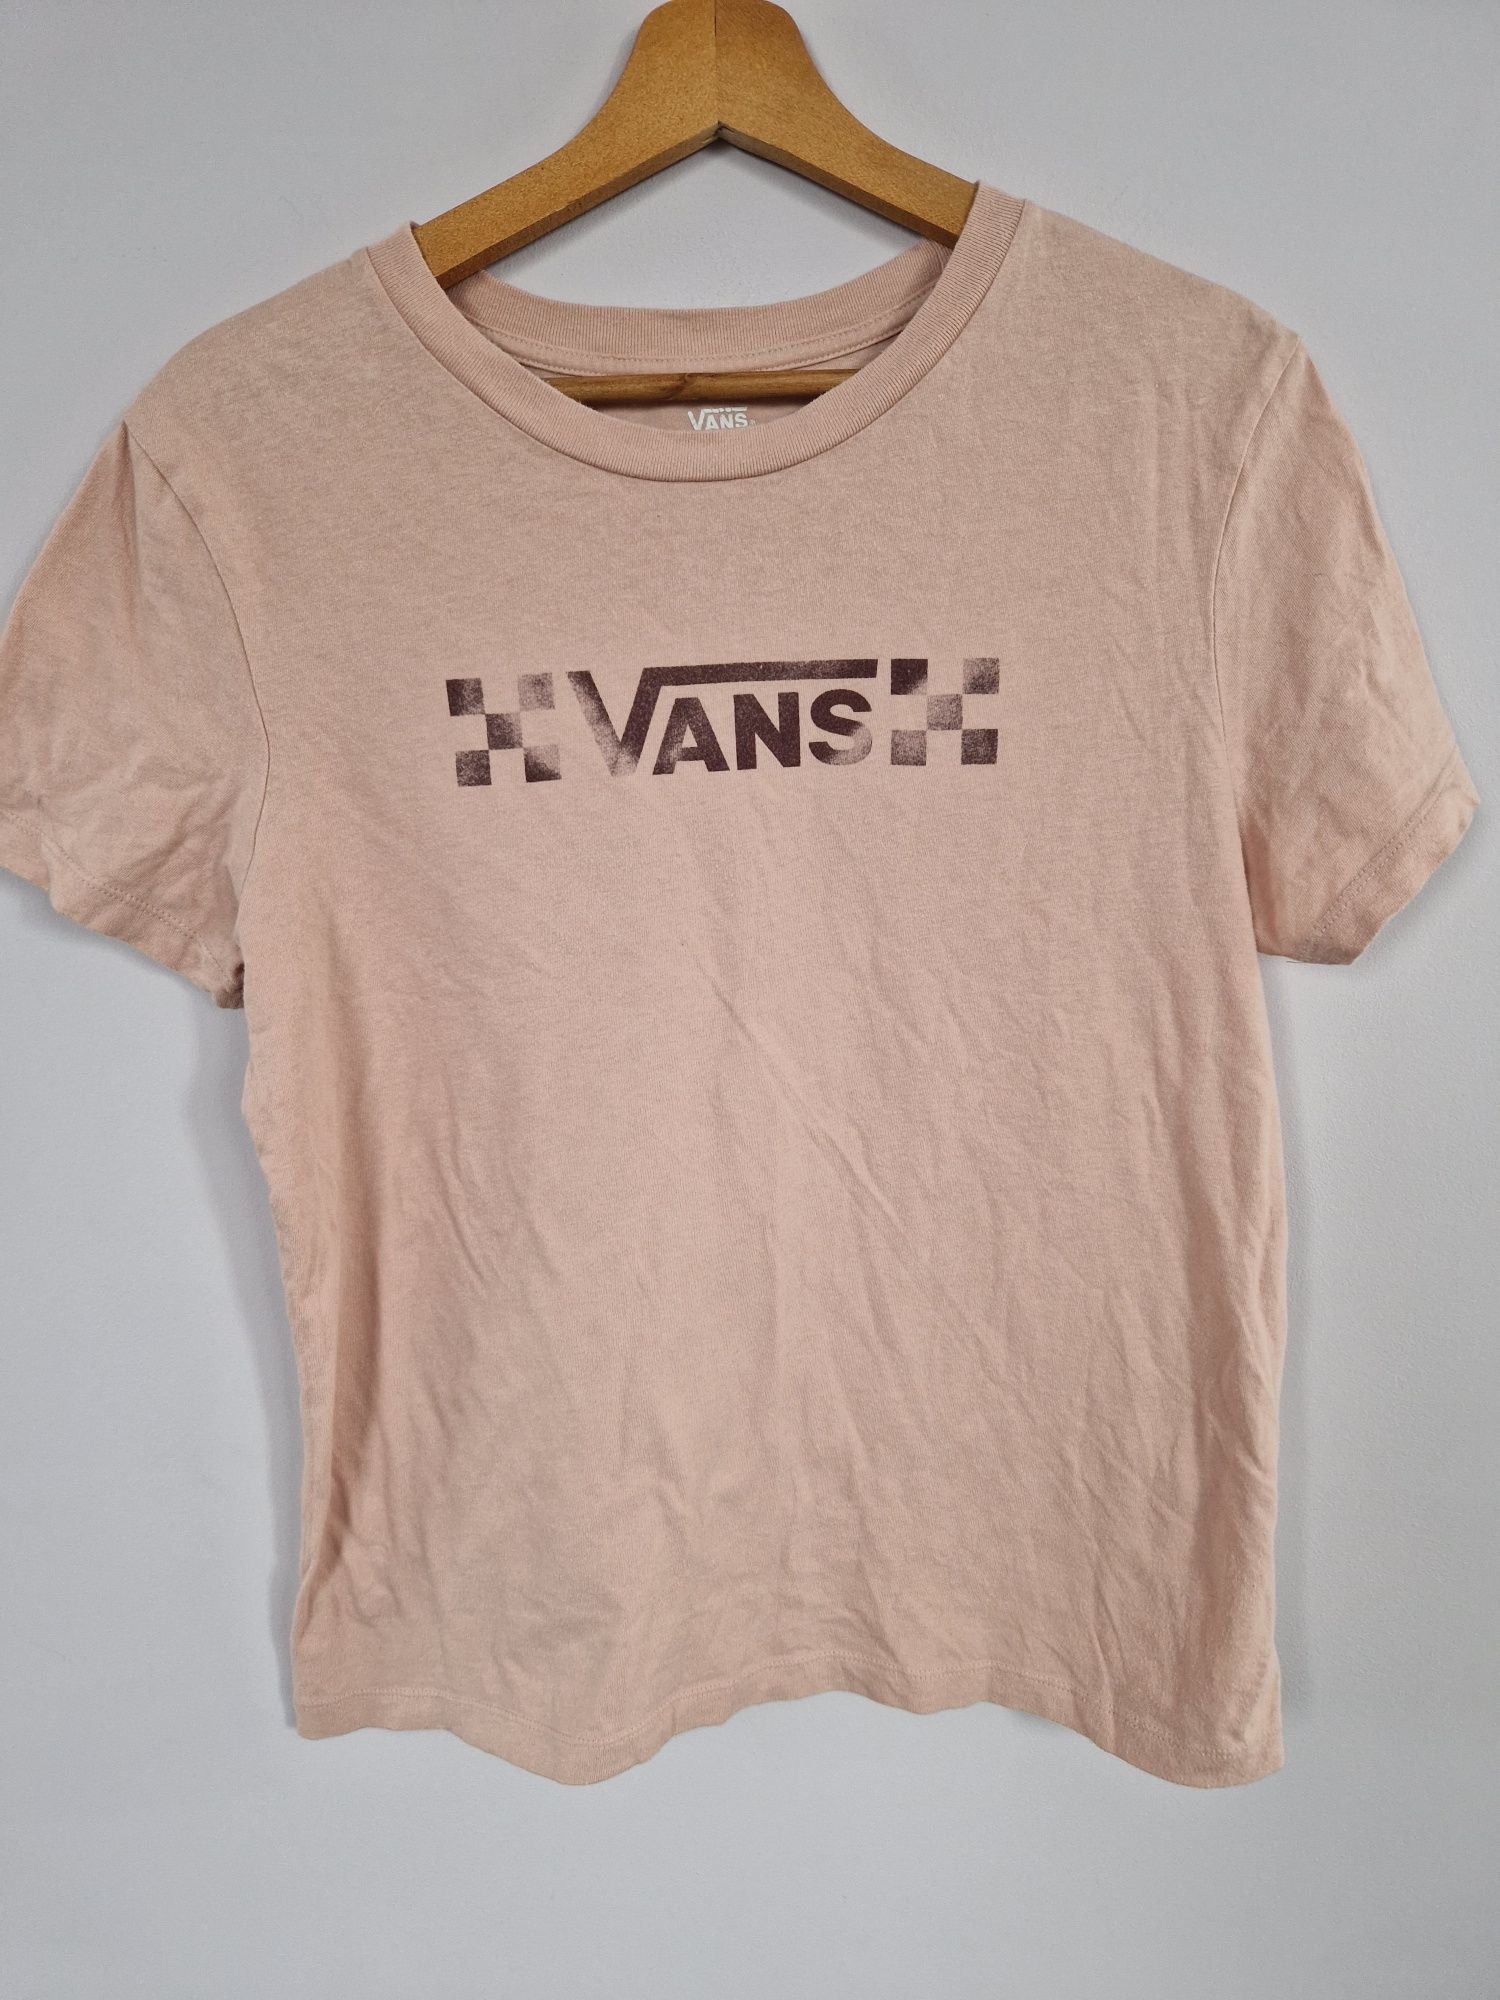 T-shirt, koszulka Vans Off the Wall, eur L, uniseks